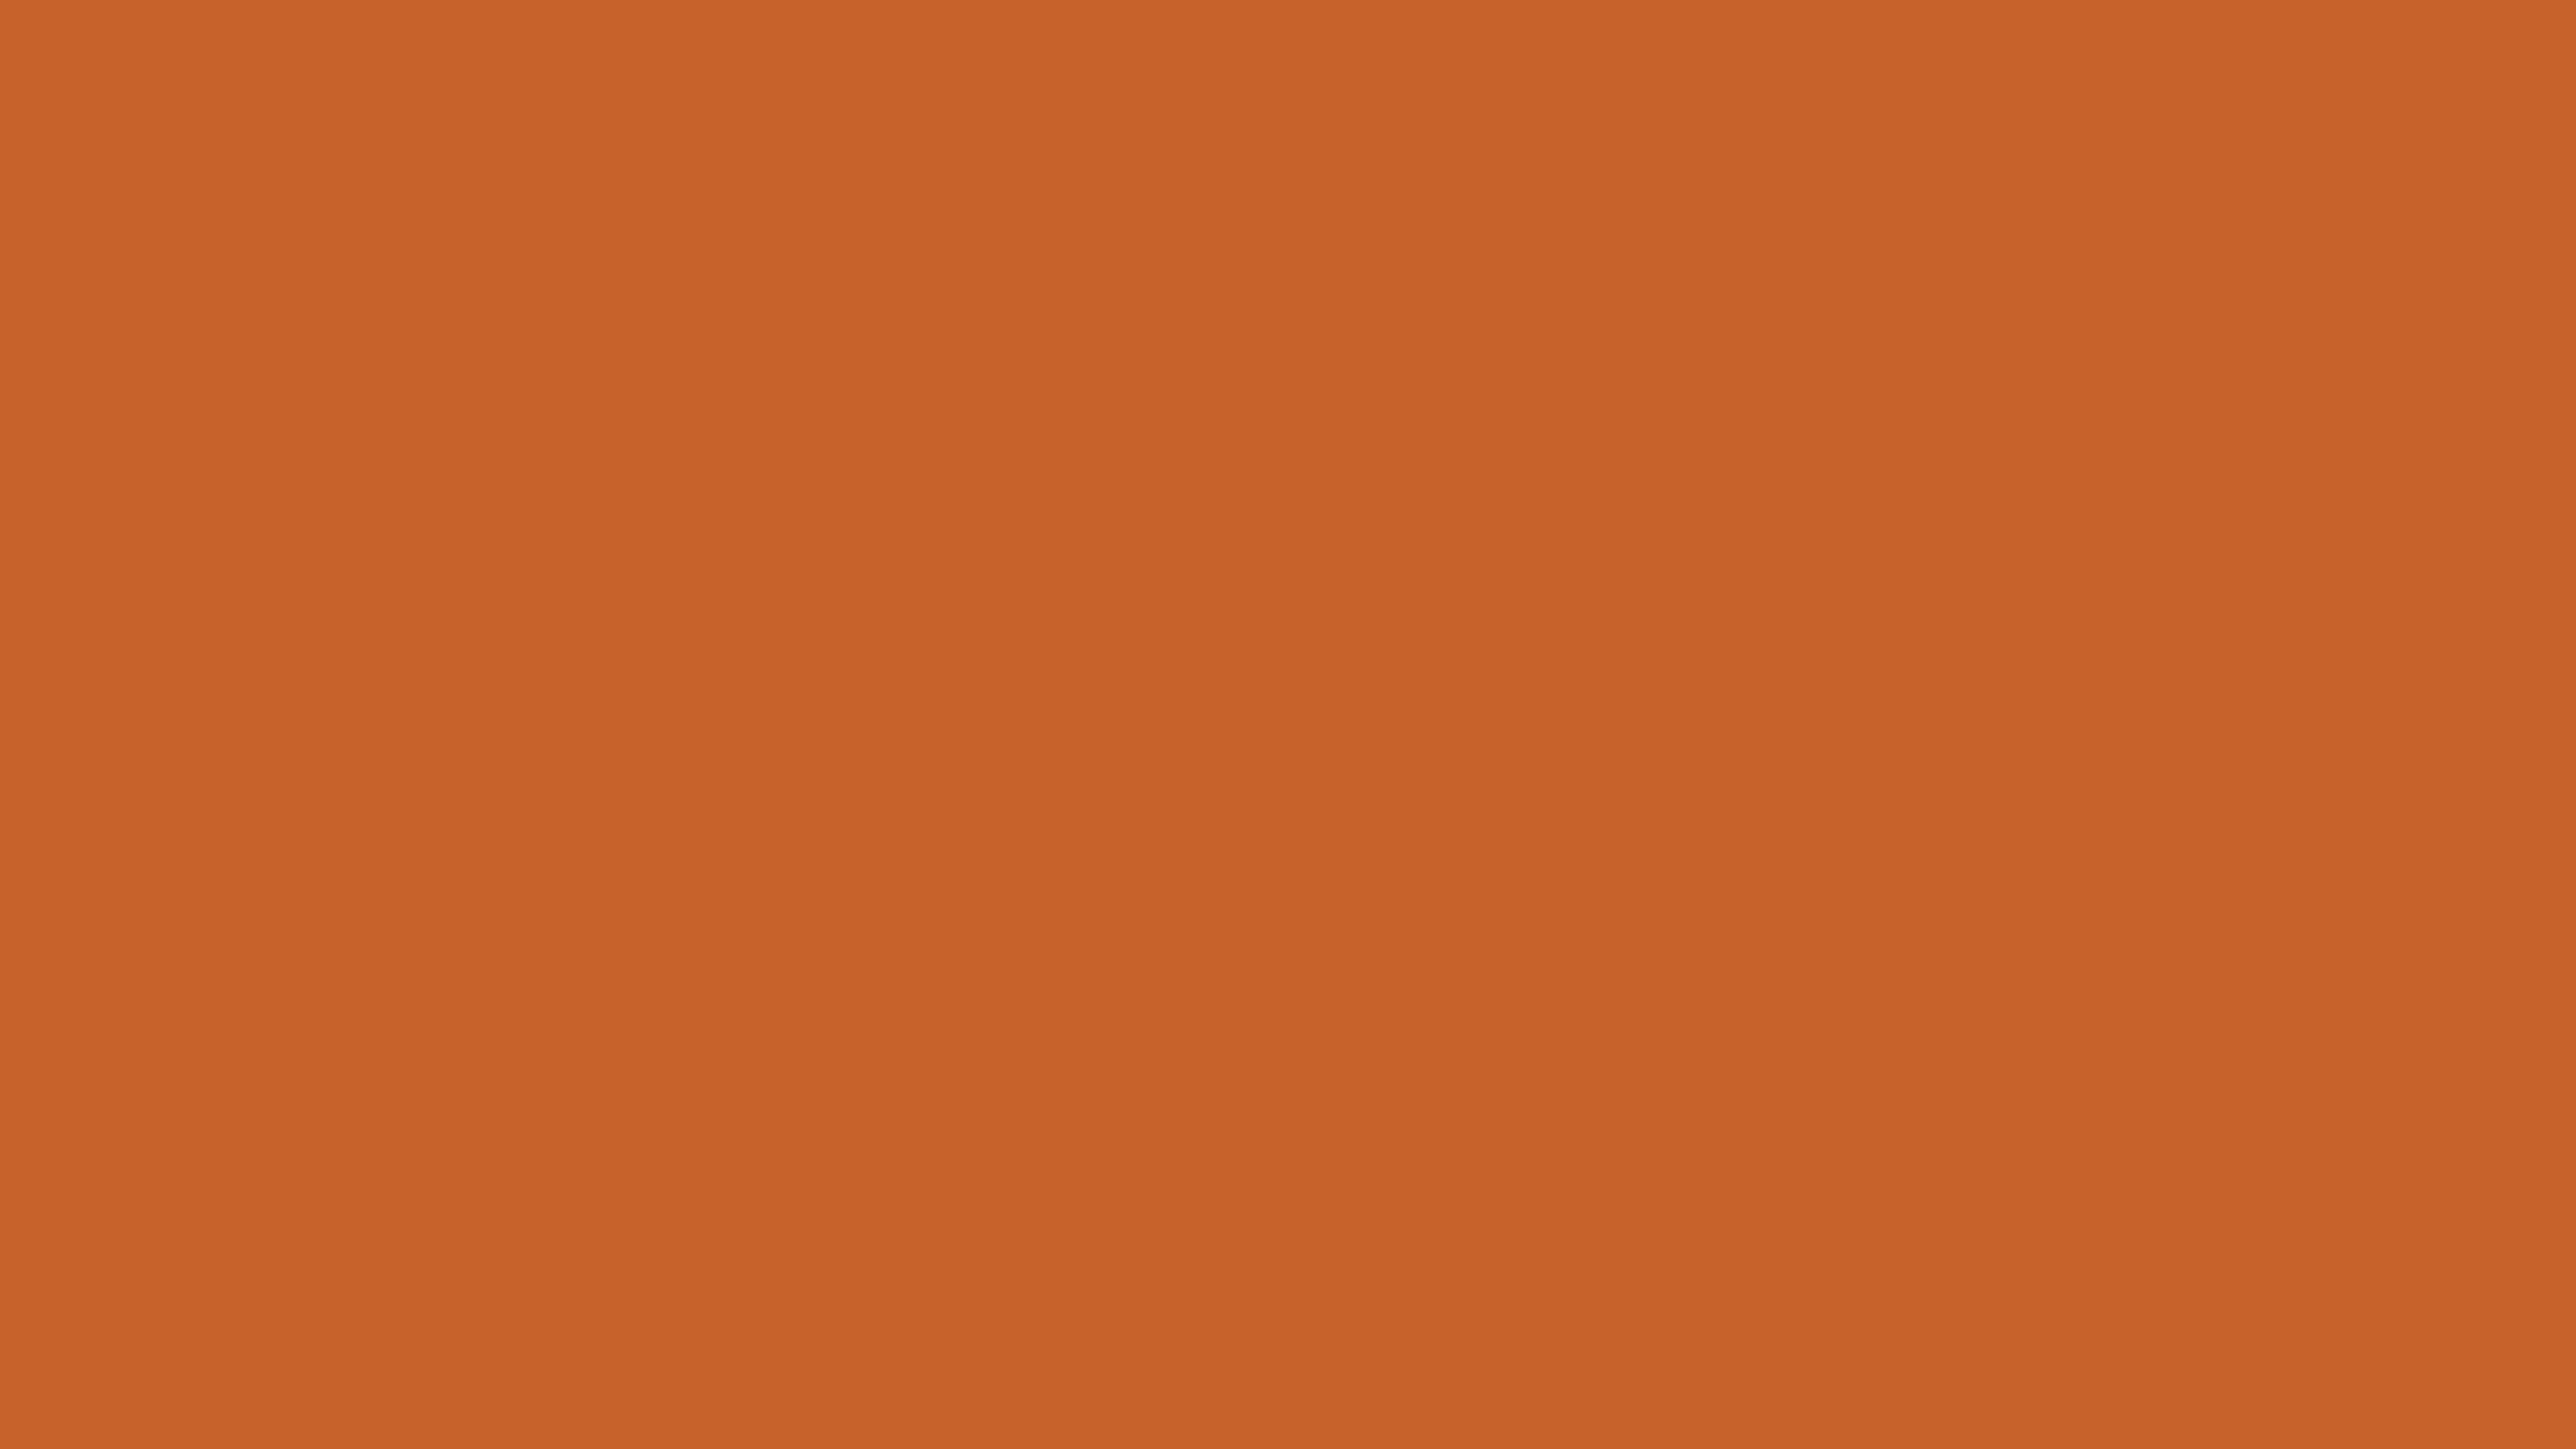 Dark Burnt Orange #b03608 color hex codes and harmonies - Paprika Orange,  Bronzed Orange, Terra Cotta Brown, Harvest Orange, Dark Dark Orange, Satin  Orange, Blaze, Burnt Orange-Red, Deep Terra Cotta